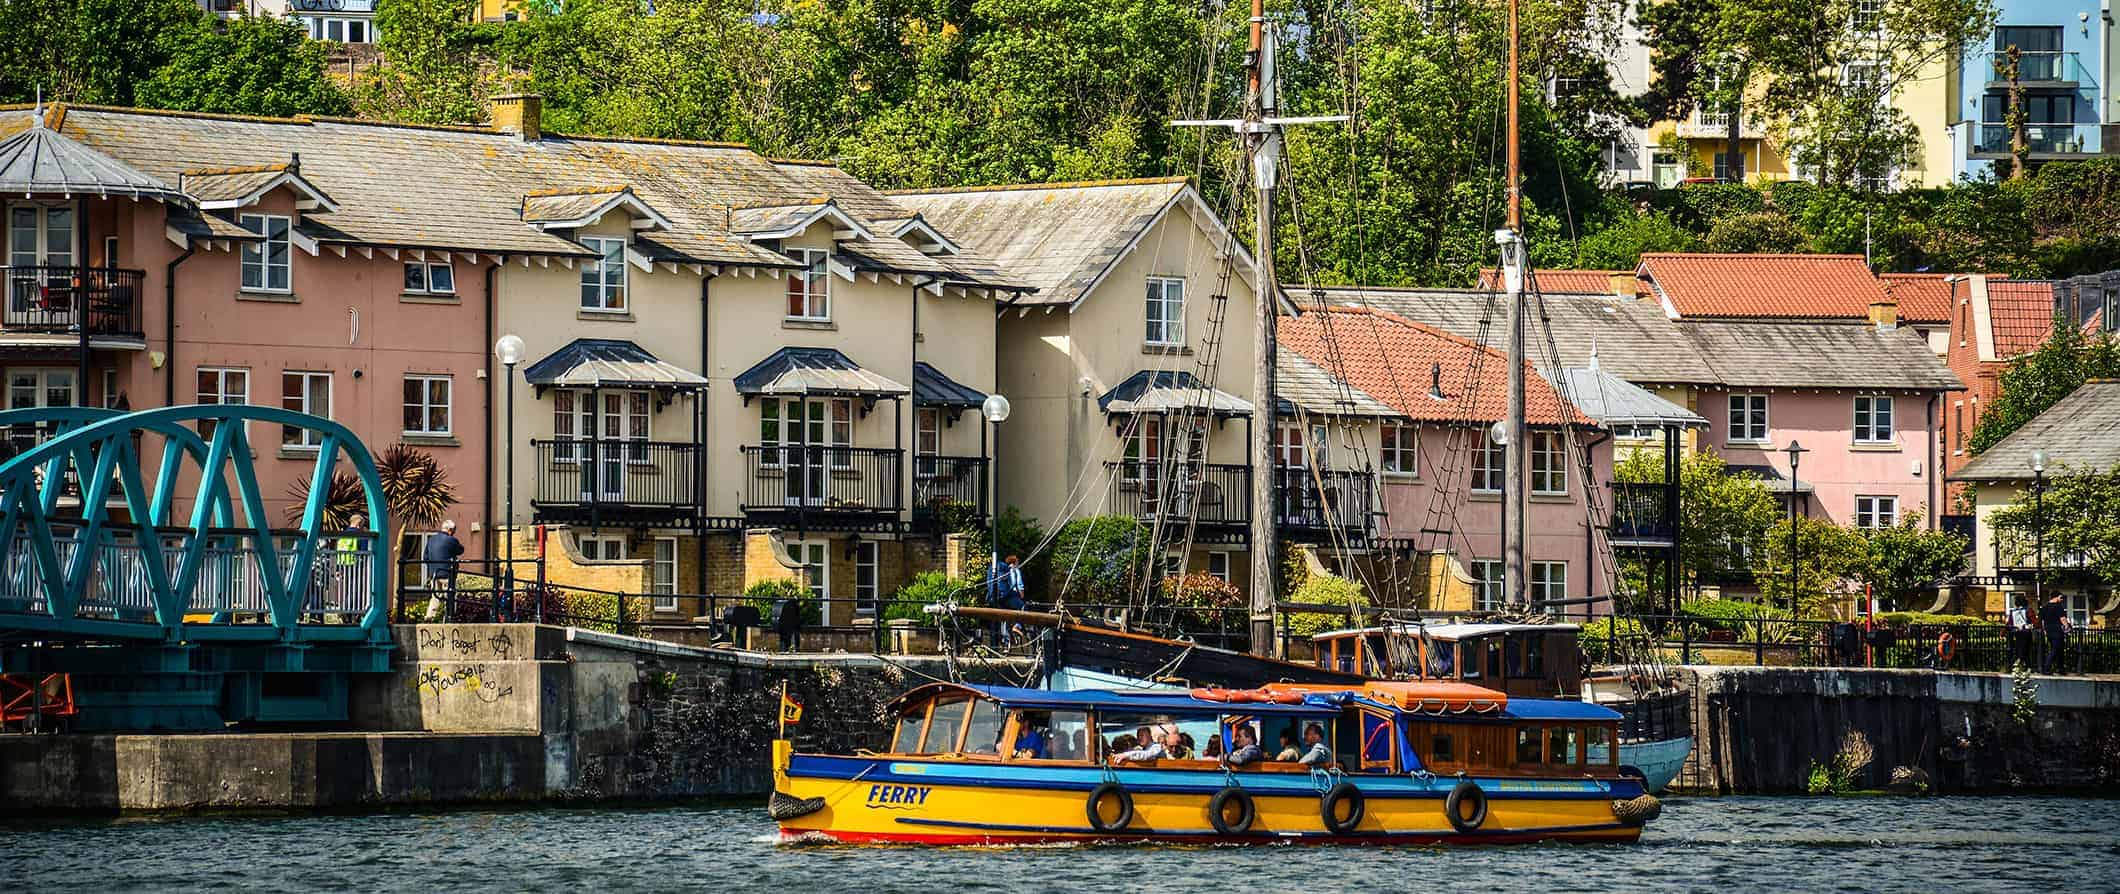 Vista panorâmica de casas coloridas em Bristol, Inglaterra